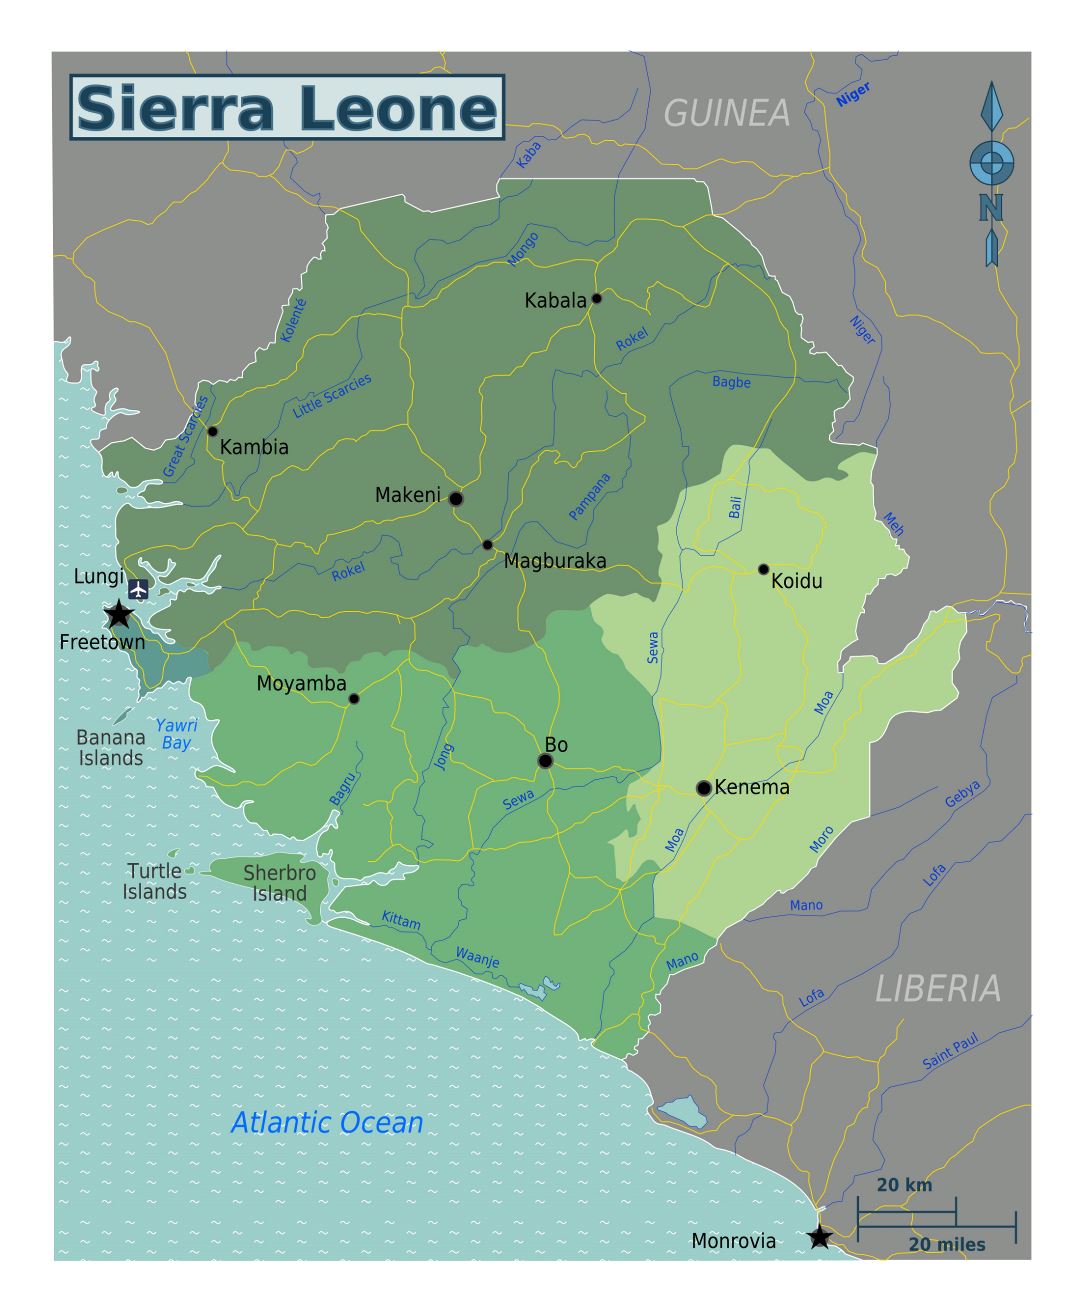 Large regions map of Sierra Leone